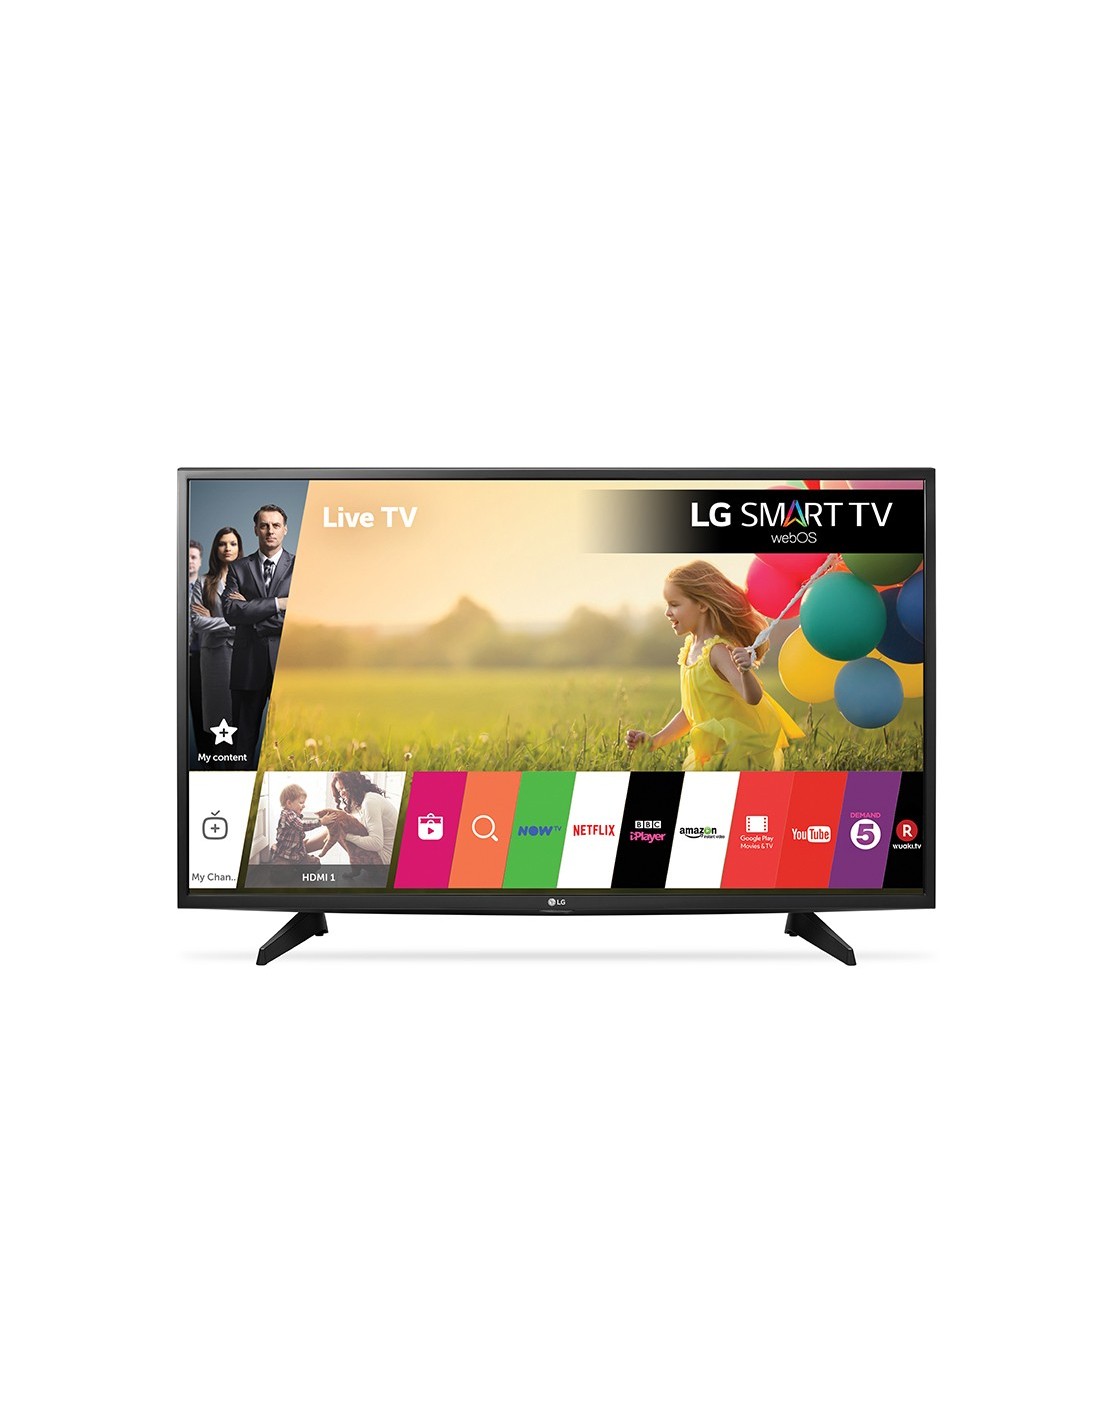 Mando a Distancia Original TV LED LG FULL HD - SMART TV // 49LF590V